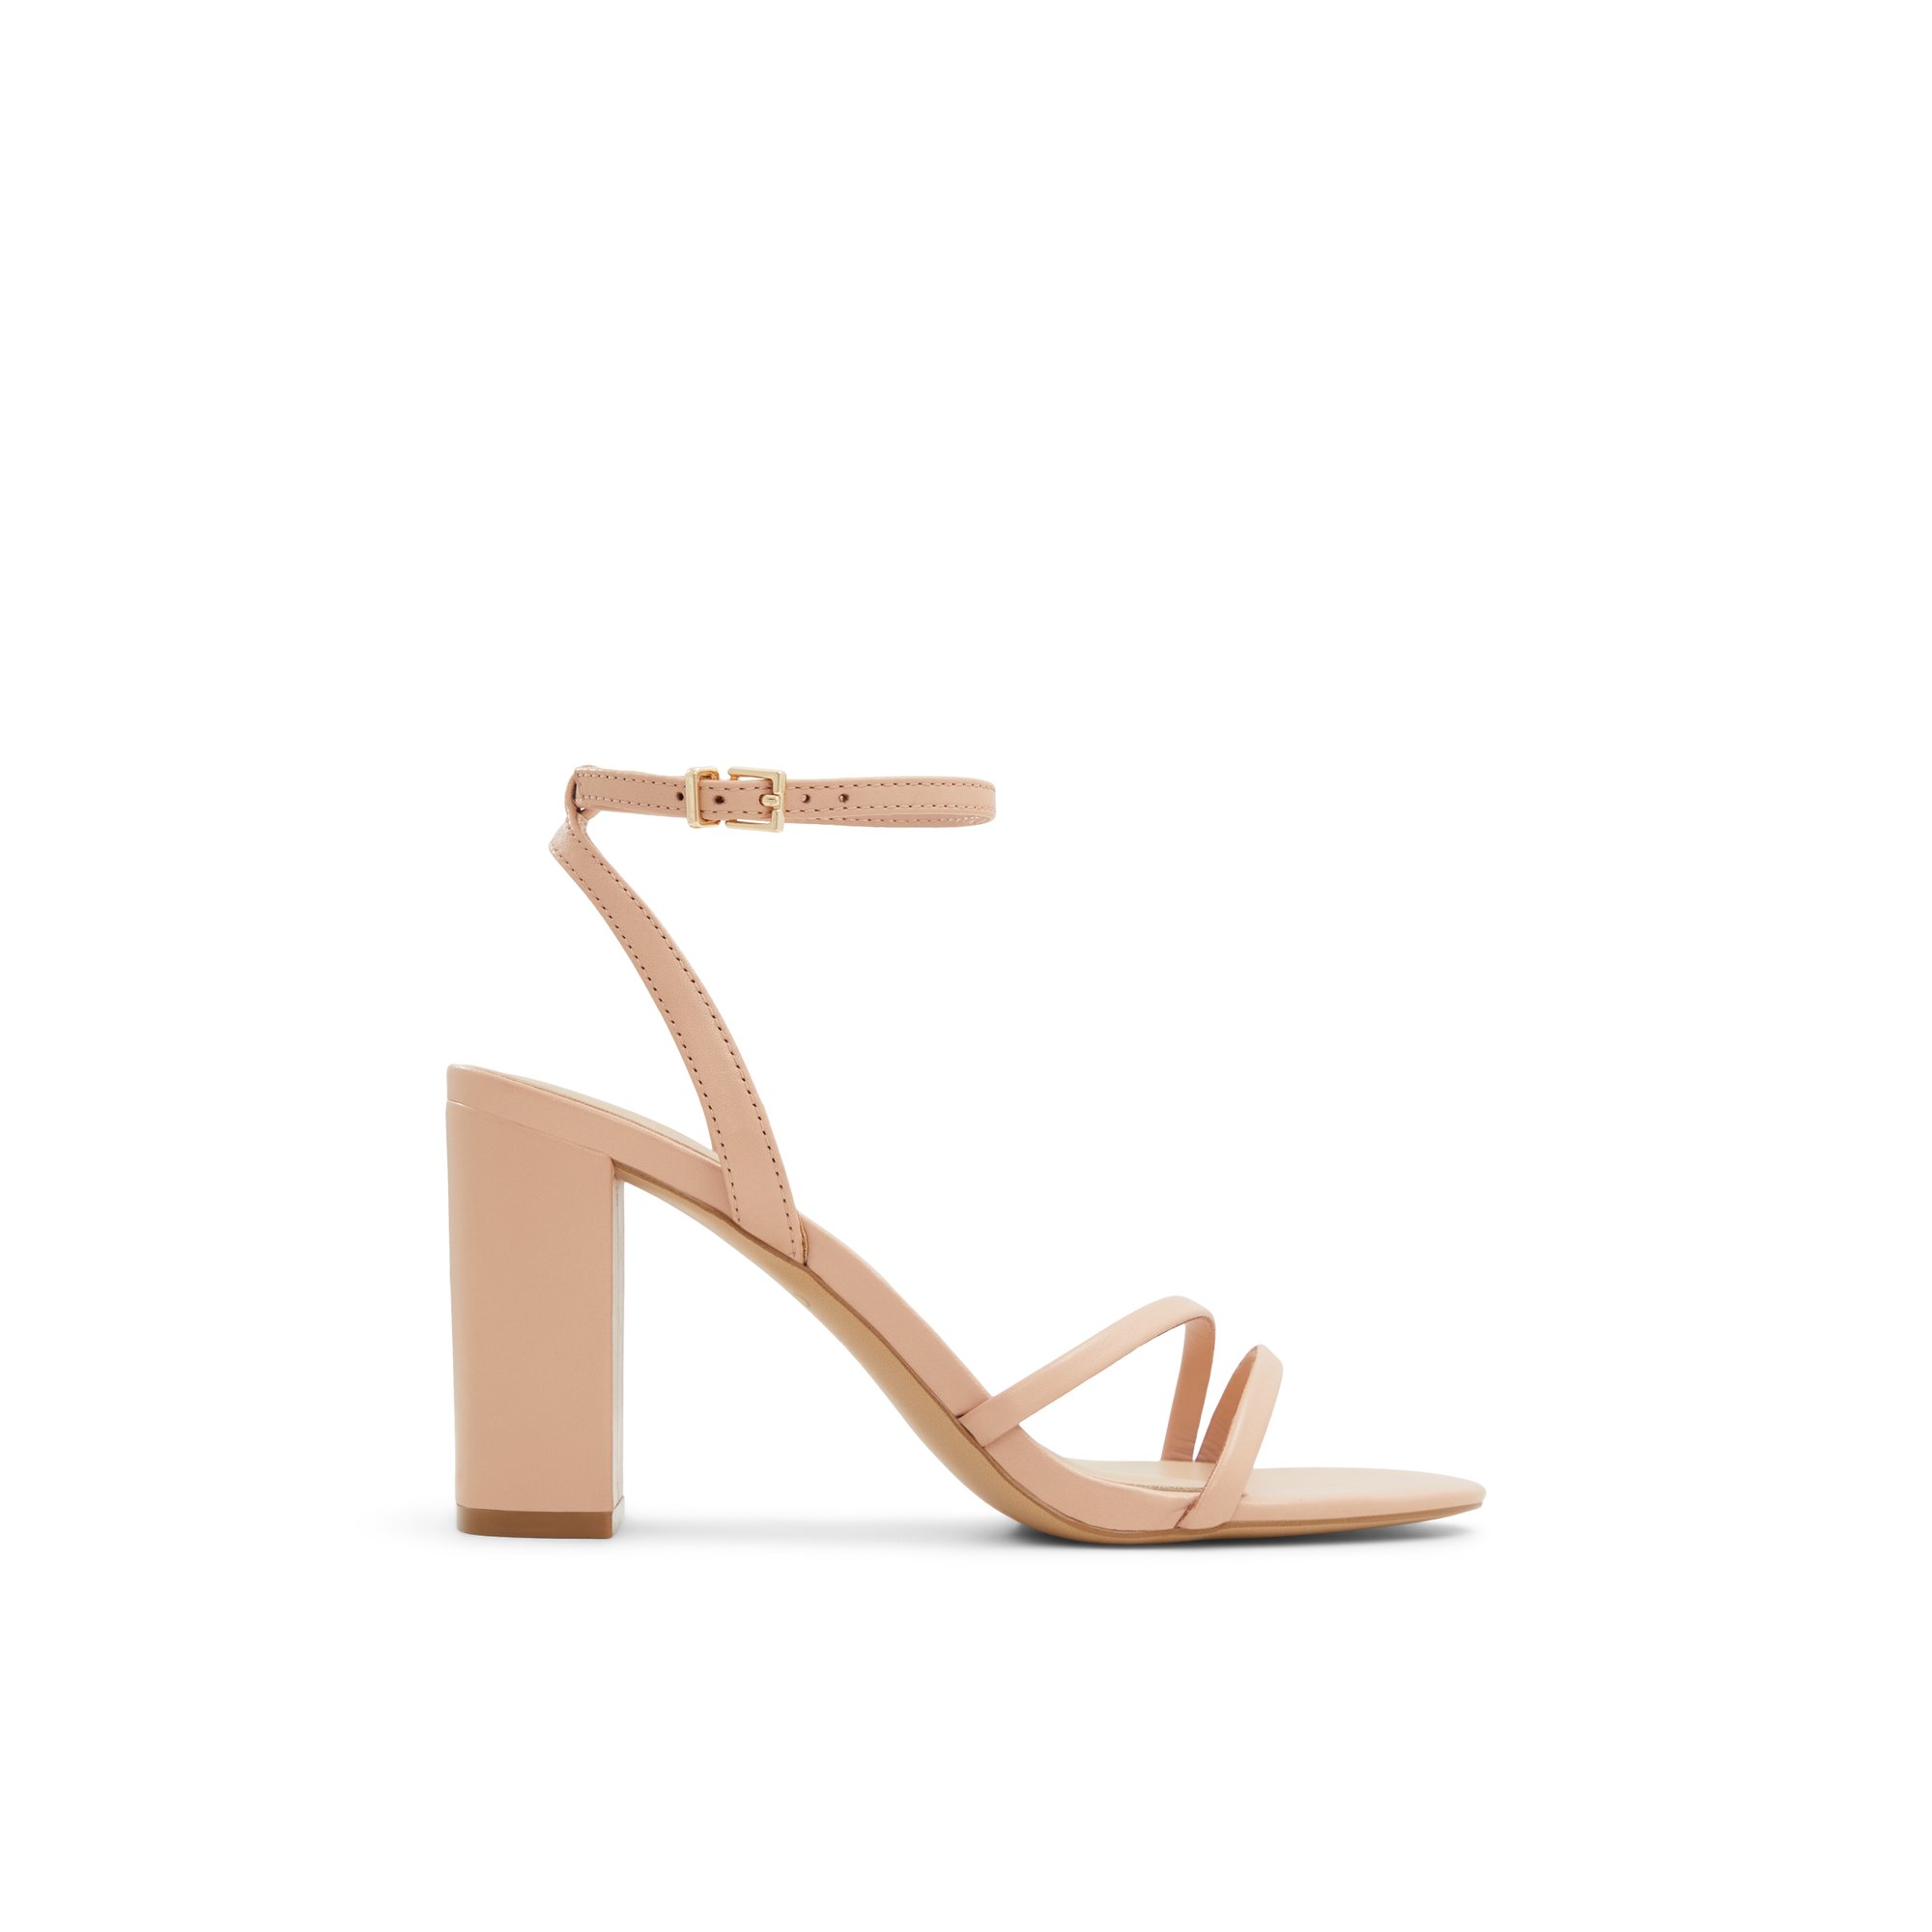 ALDO Rosalind - Women's Strappy Sandal Sandals - Beige